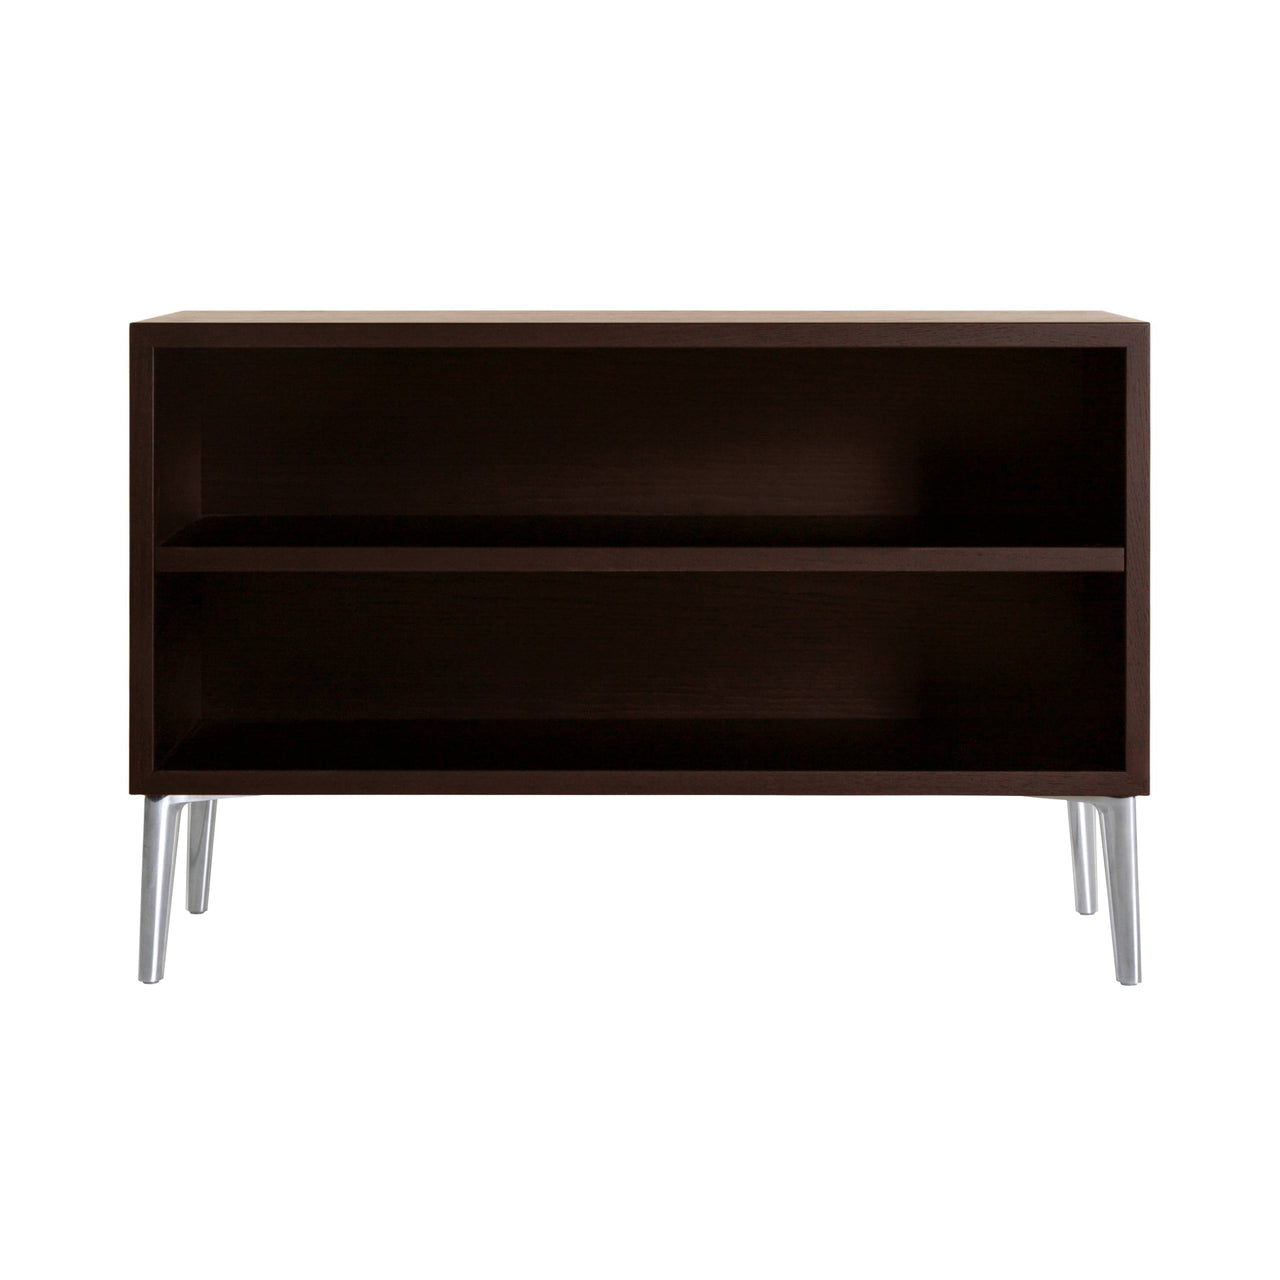 Sofa So Good Demi Double Shelf: Cinnamon